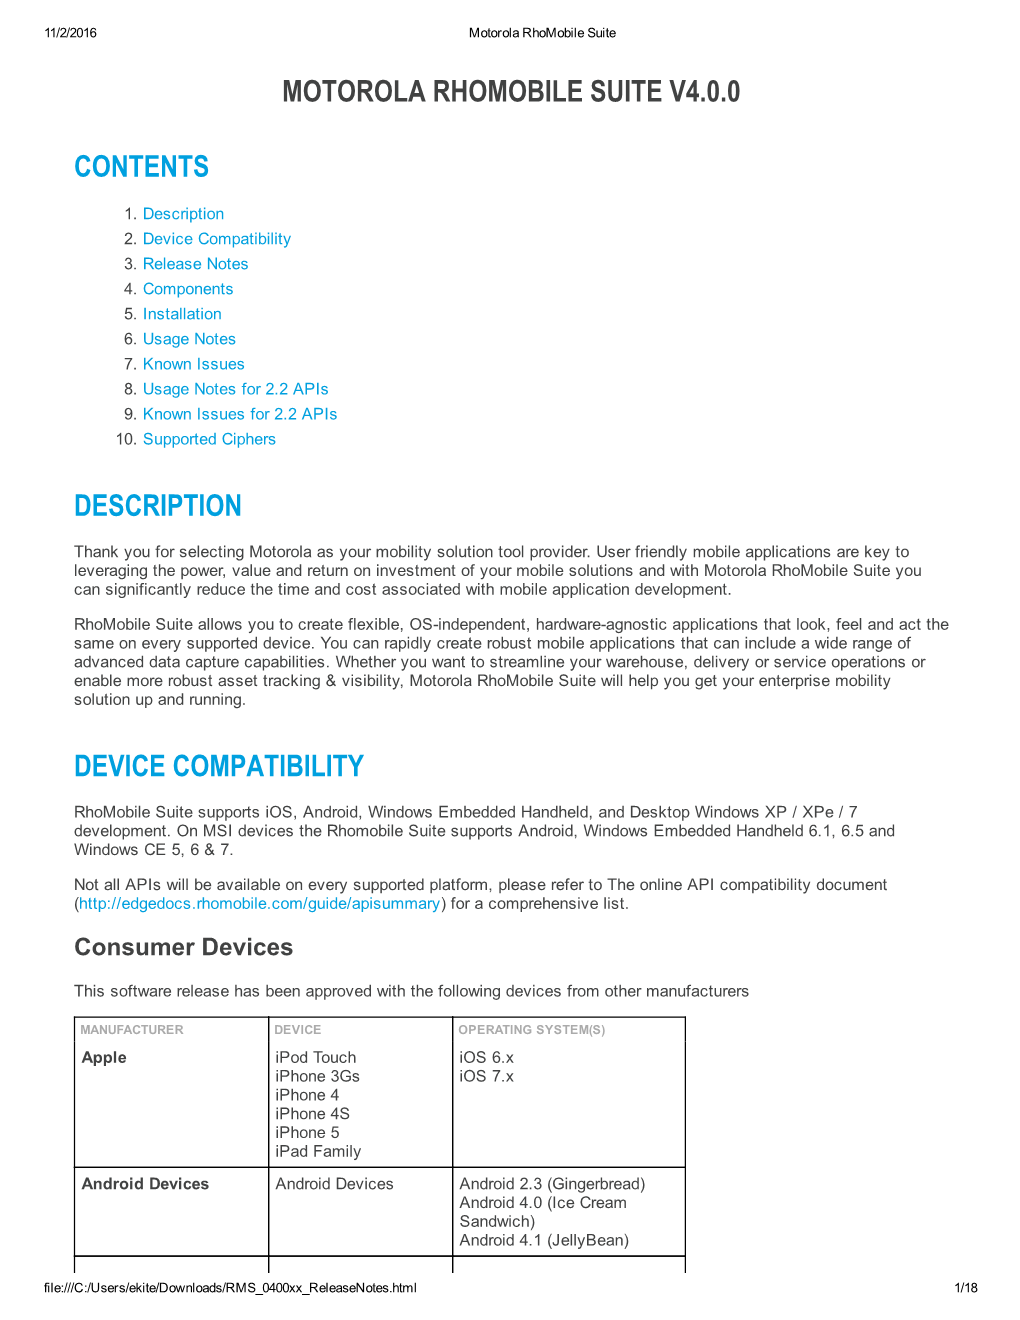 Motorola Rhomobile Suite V4.0.0 Contents Description